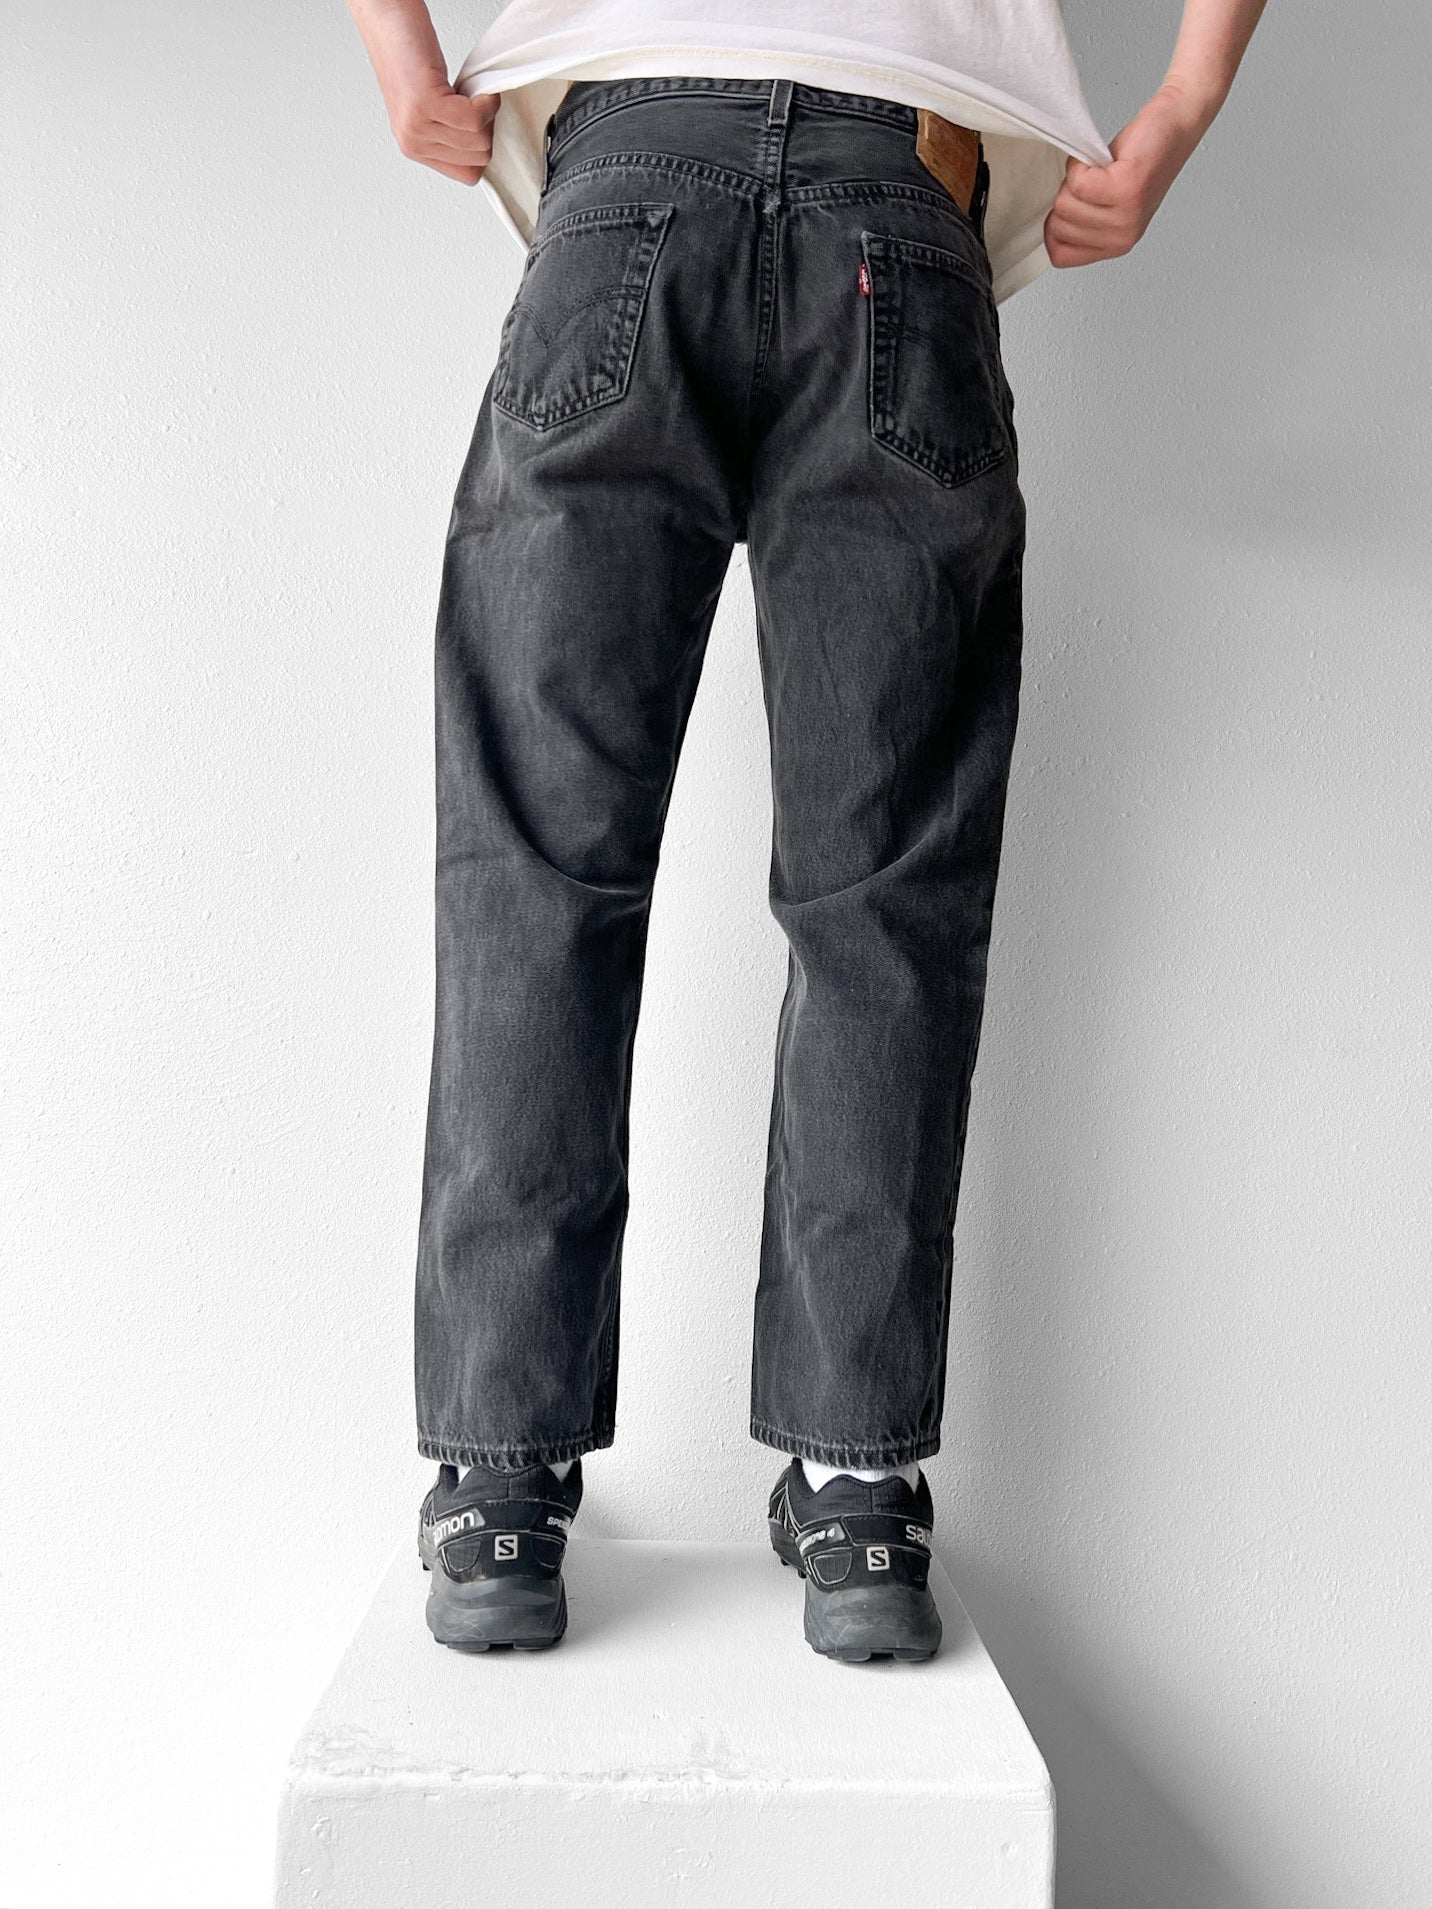 Levi’s 501 Faded Black Jeans - 36 x 30